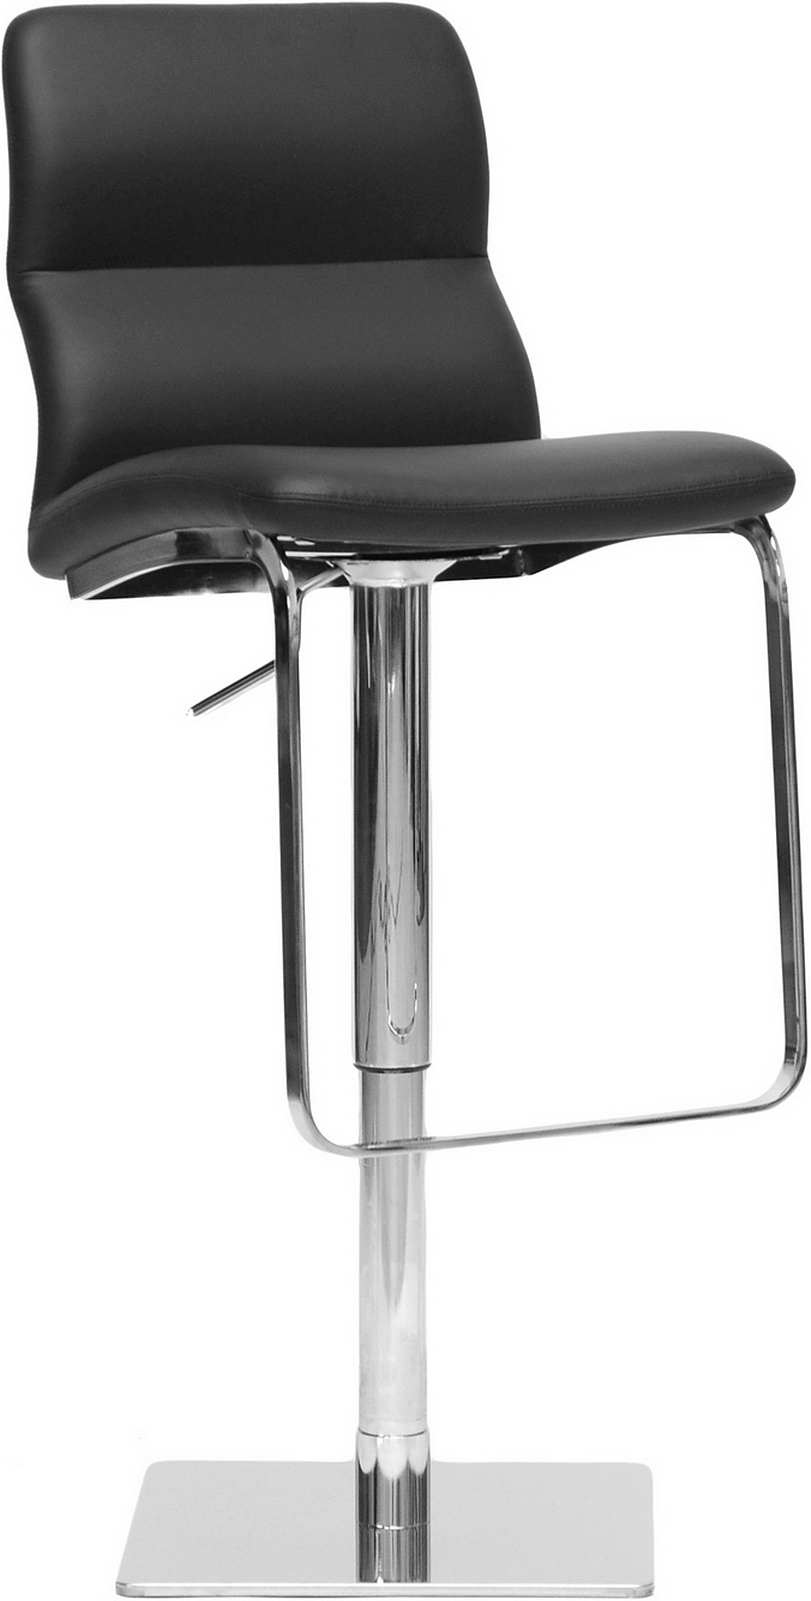 the baxton studio helsinki modern bar stool black